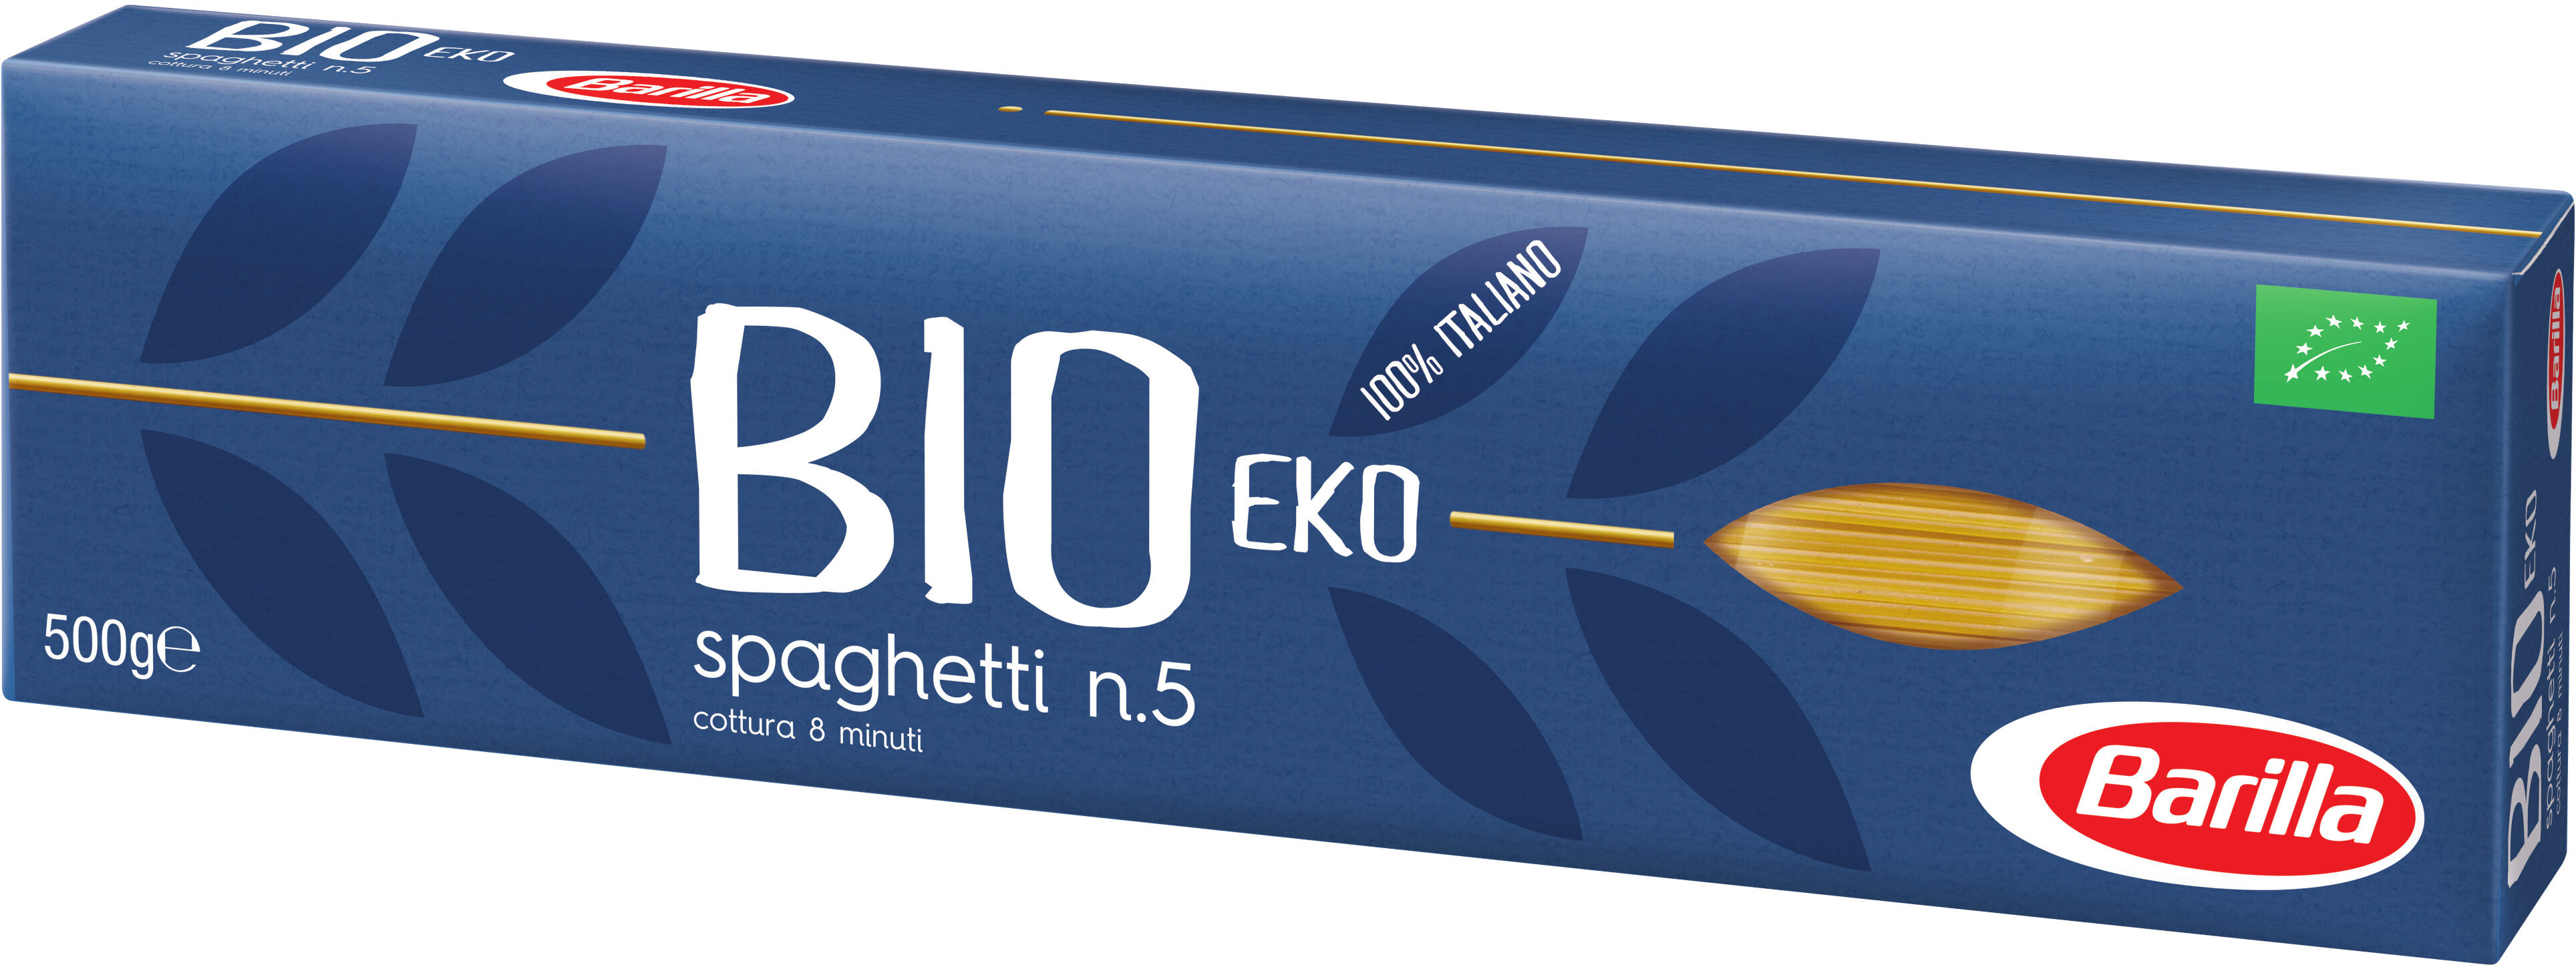 Barilla pates spaghetti bio 500g - Product - fr